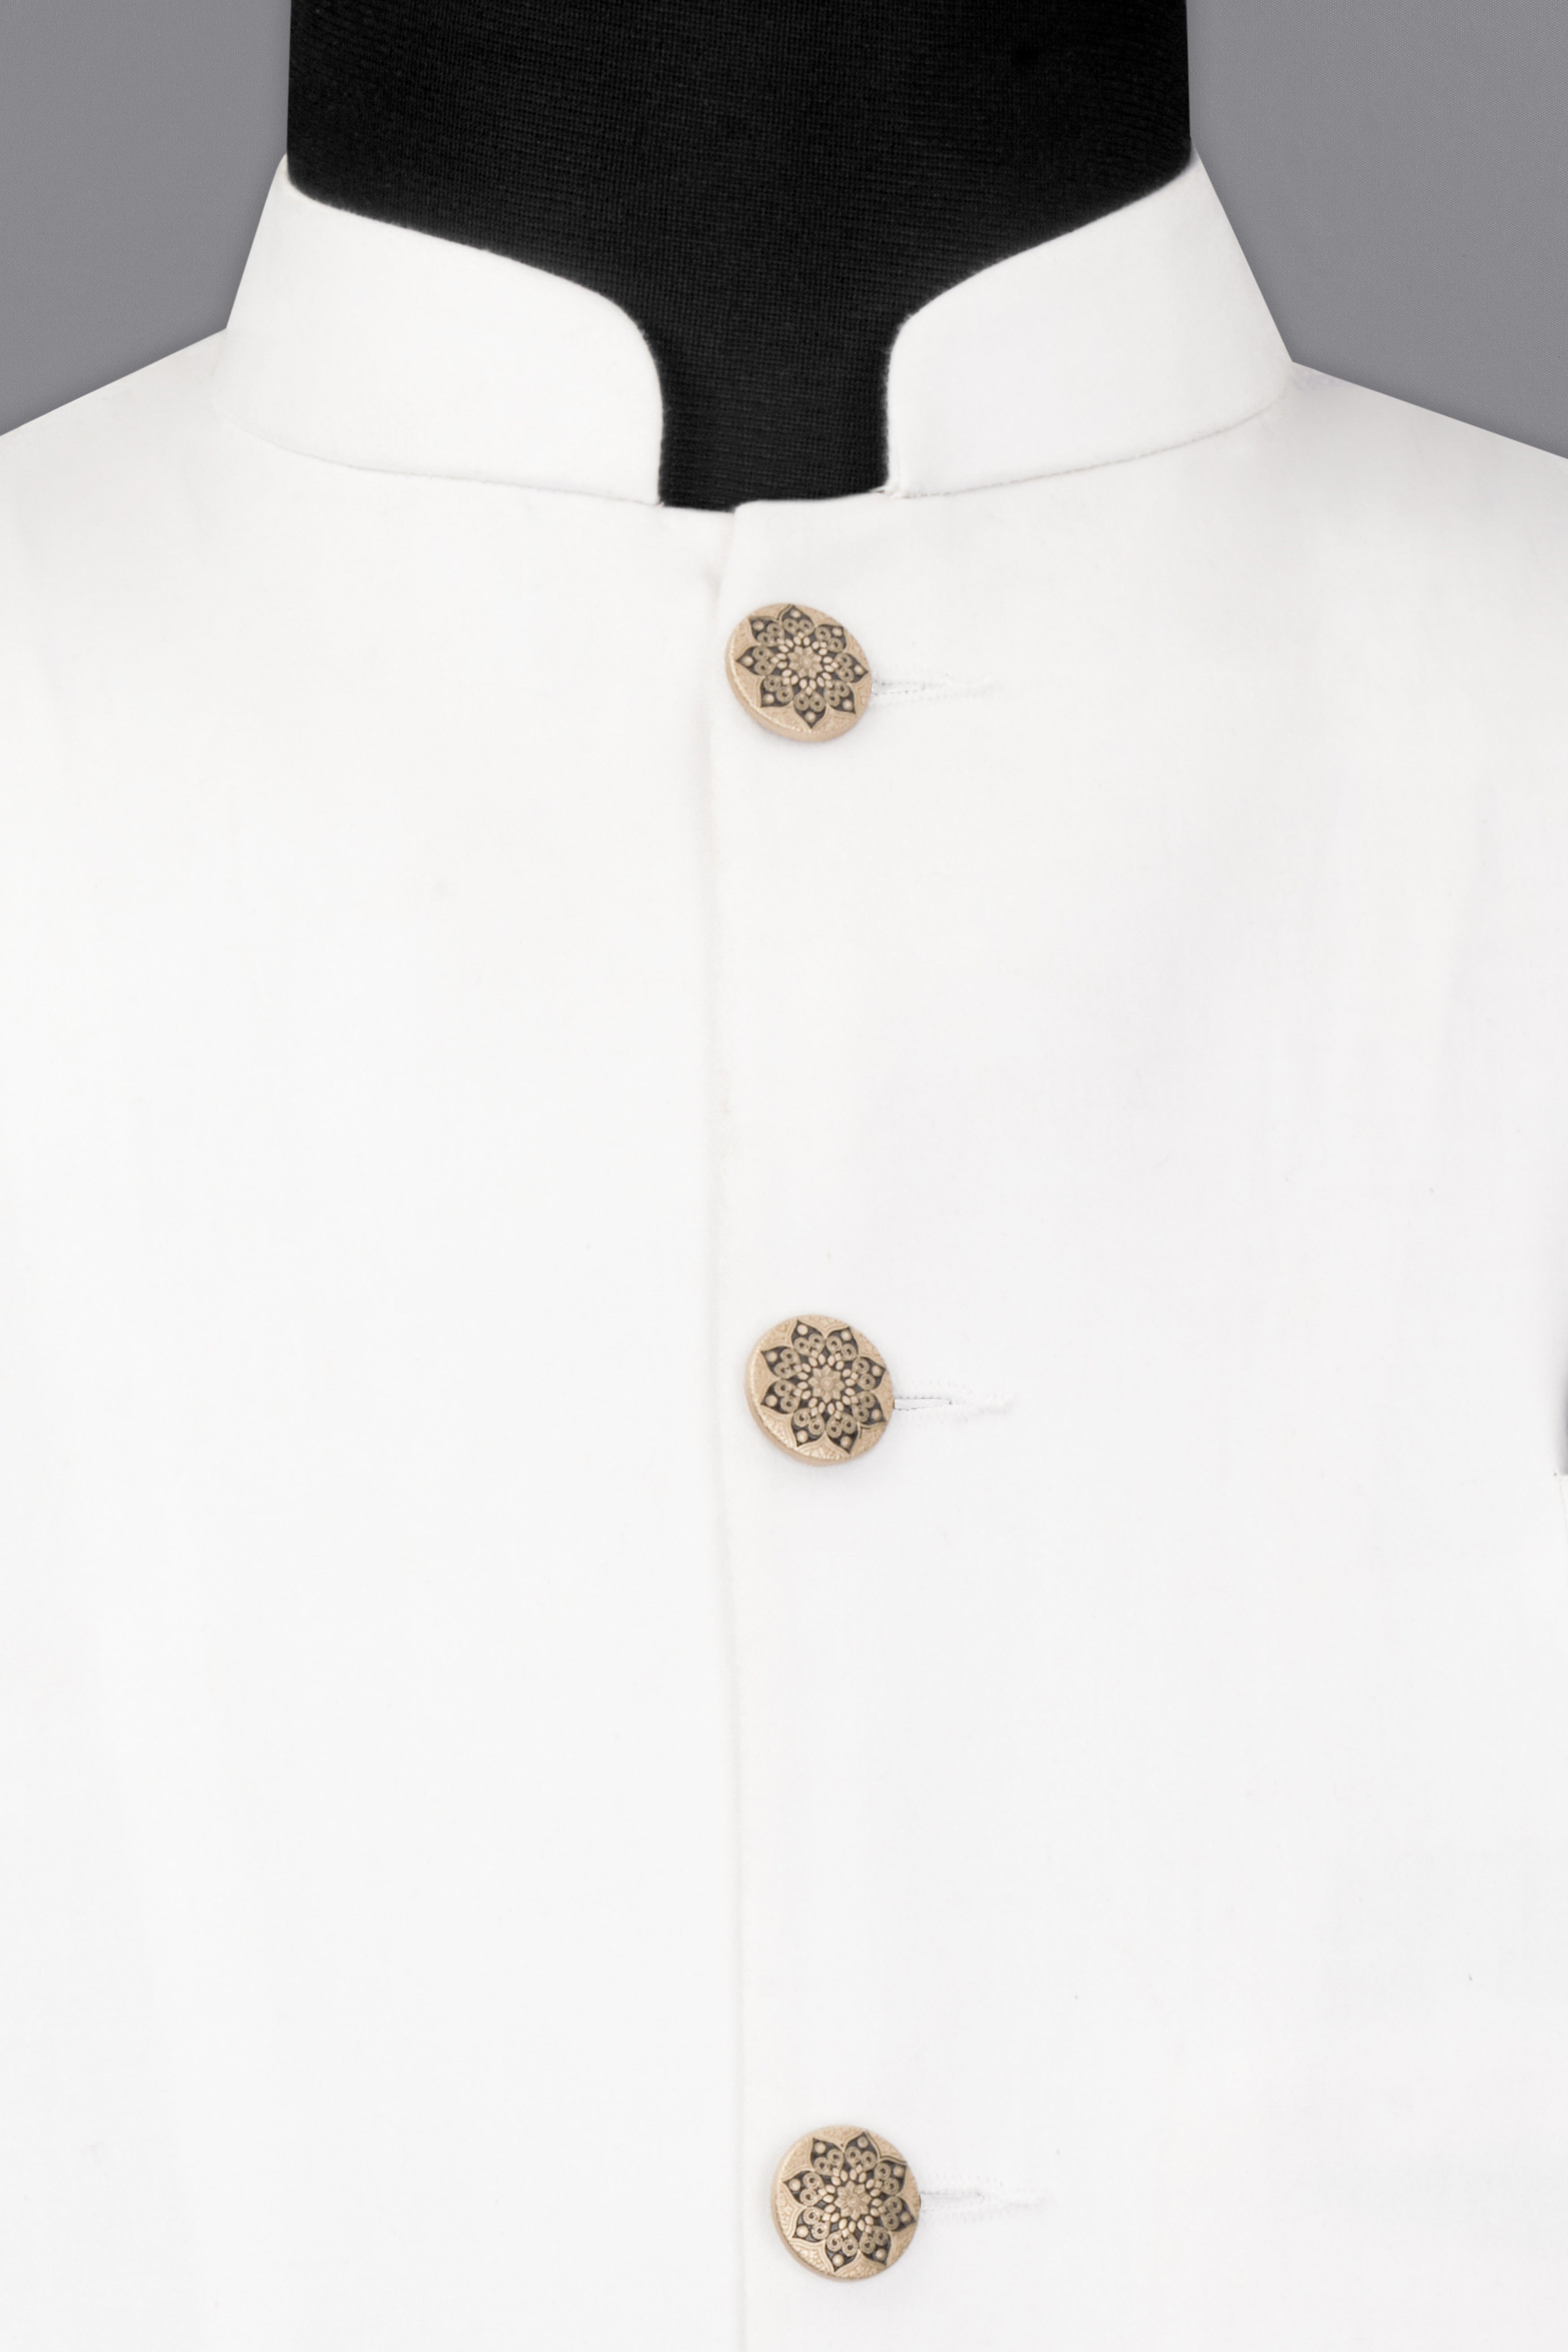 Bright White Cross Placket Stretchable traveler Premium Cotton Bandhgala Suit